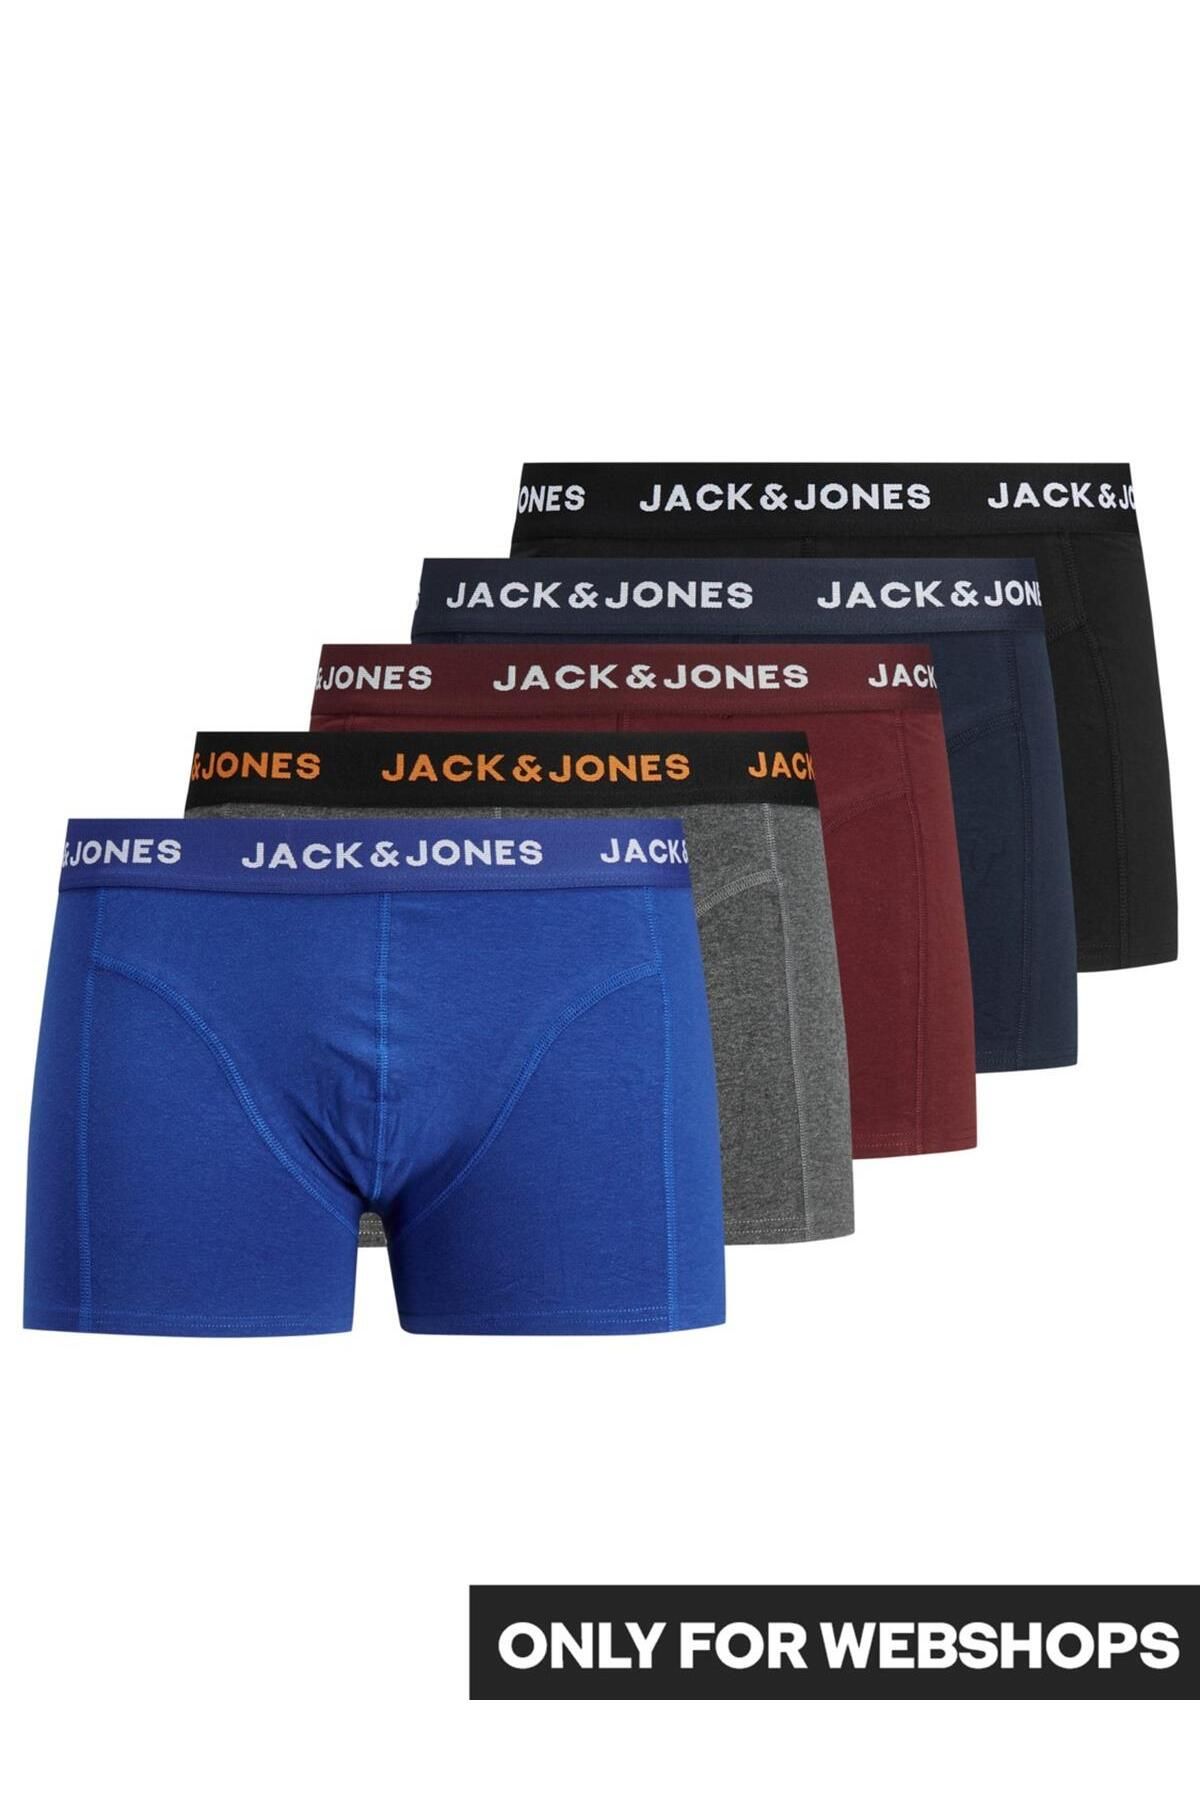 Jack & Jones KOPYA - Jack Jones Lıver 5 Li Paket Erkek Boxer